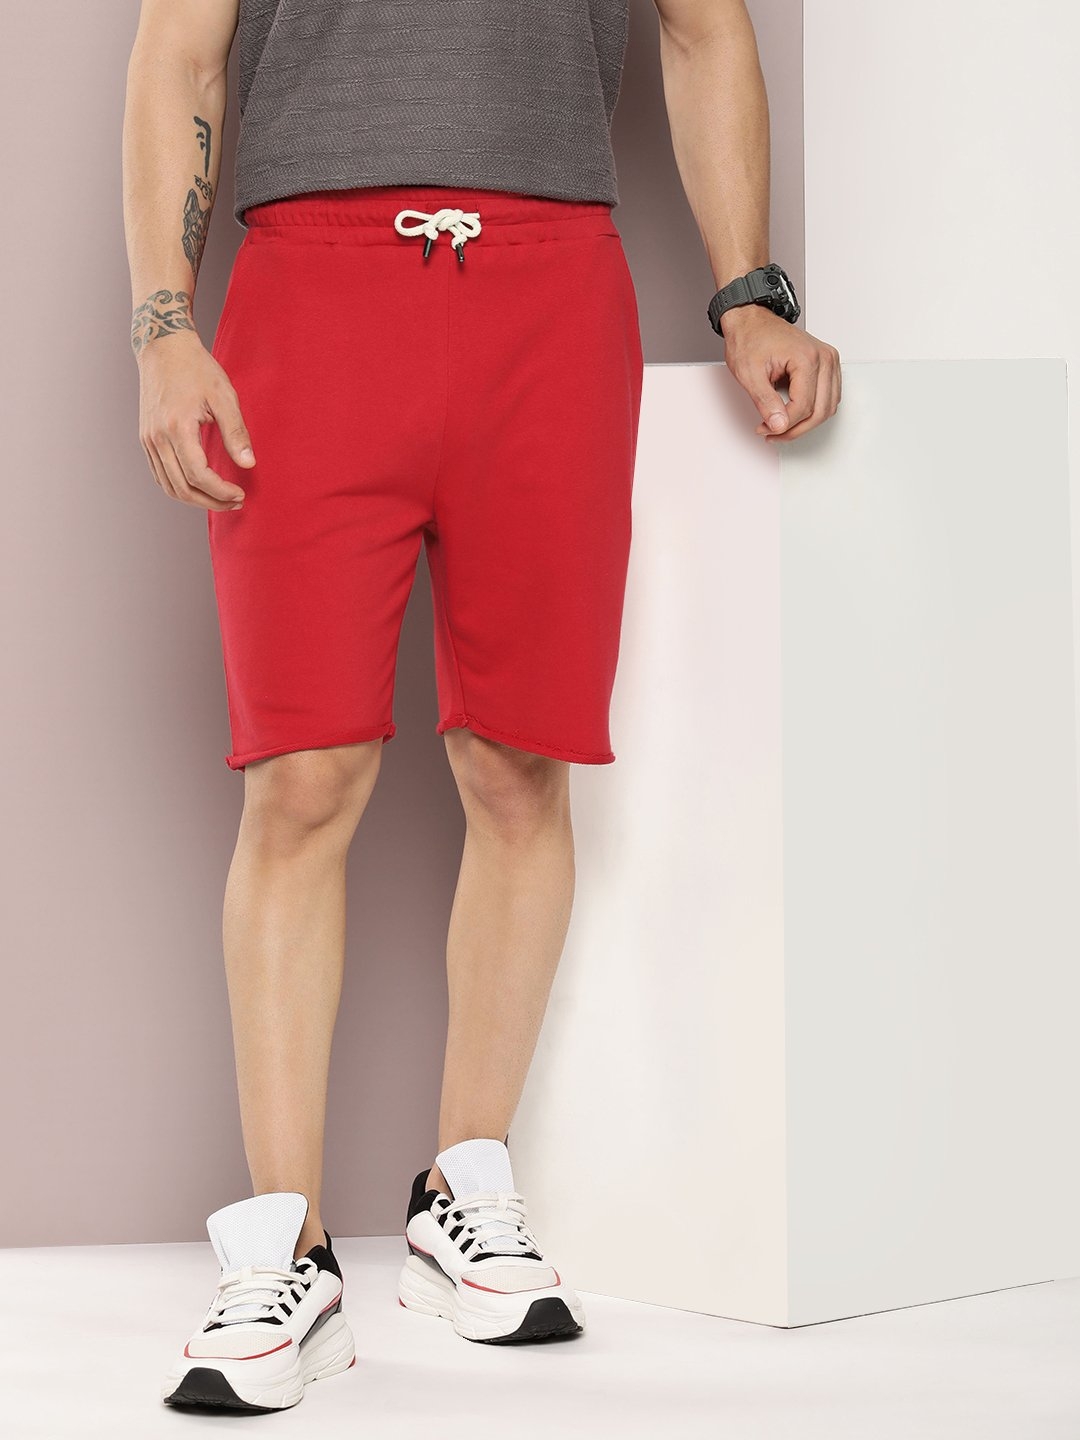 Dillinger Red Solid shorts